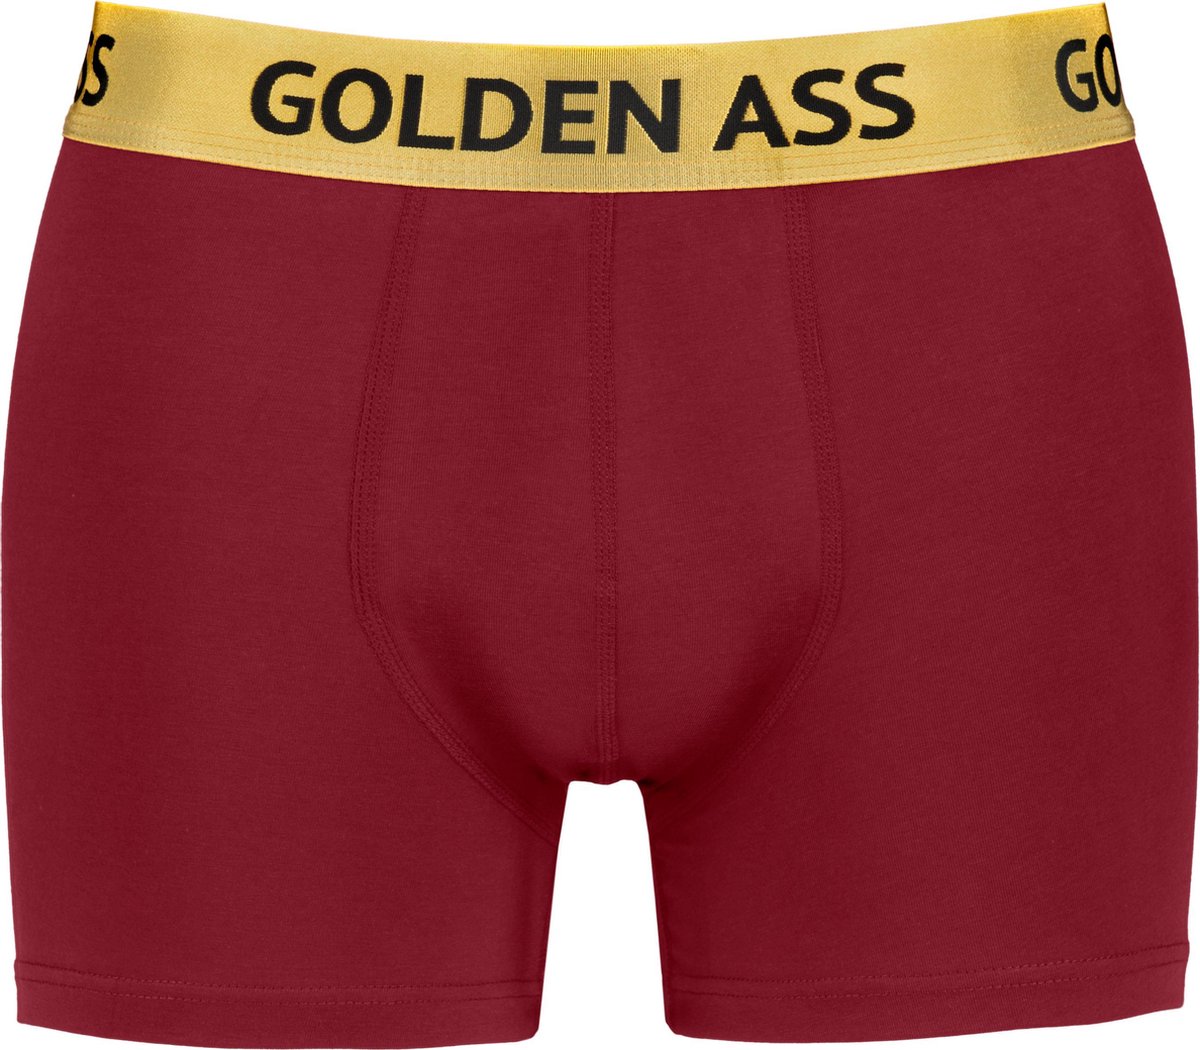 Golden Ass - Heren boxershort rood L